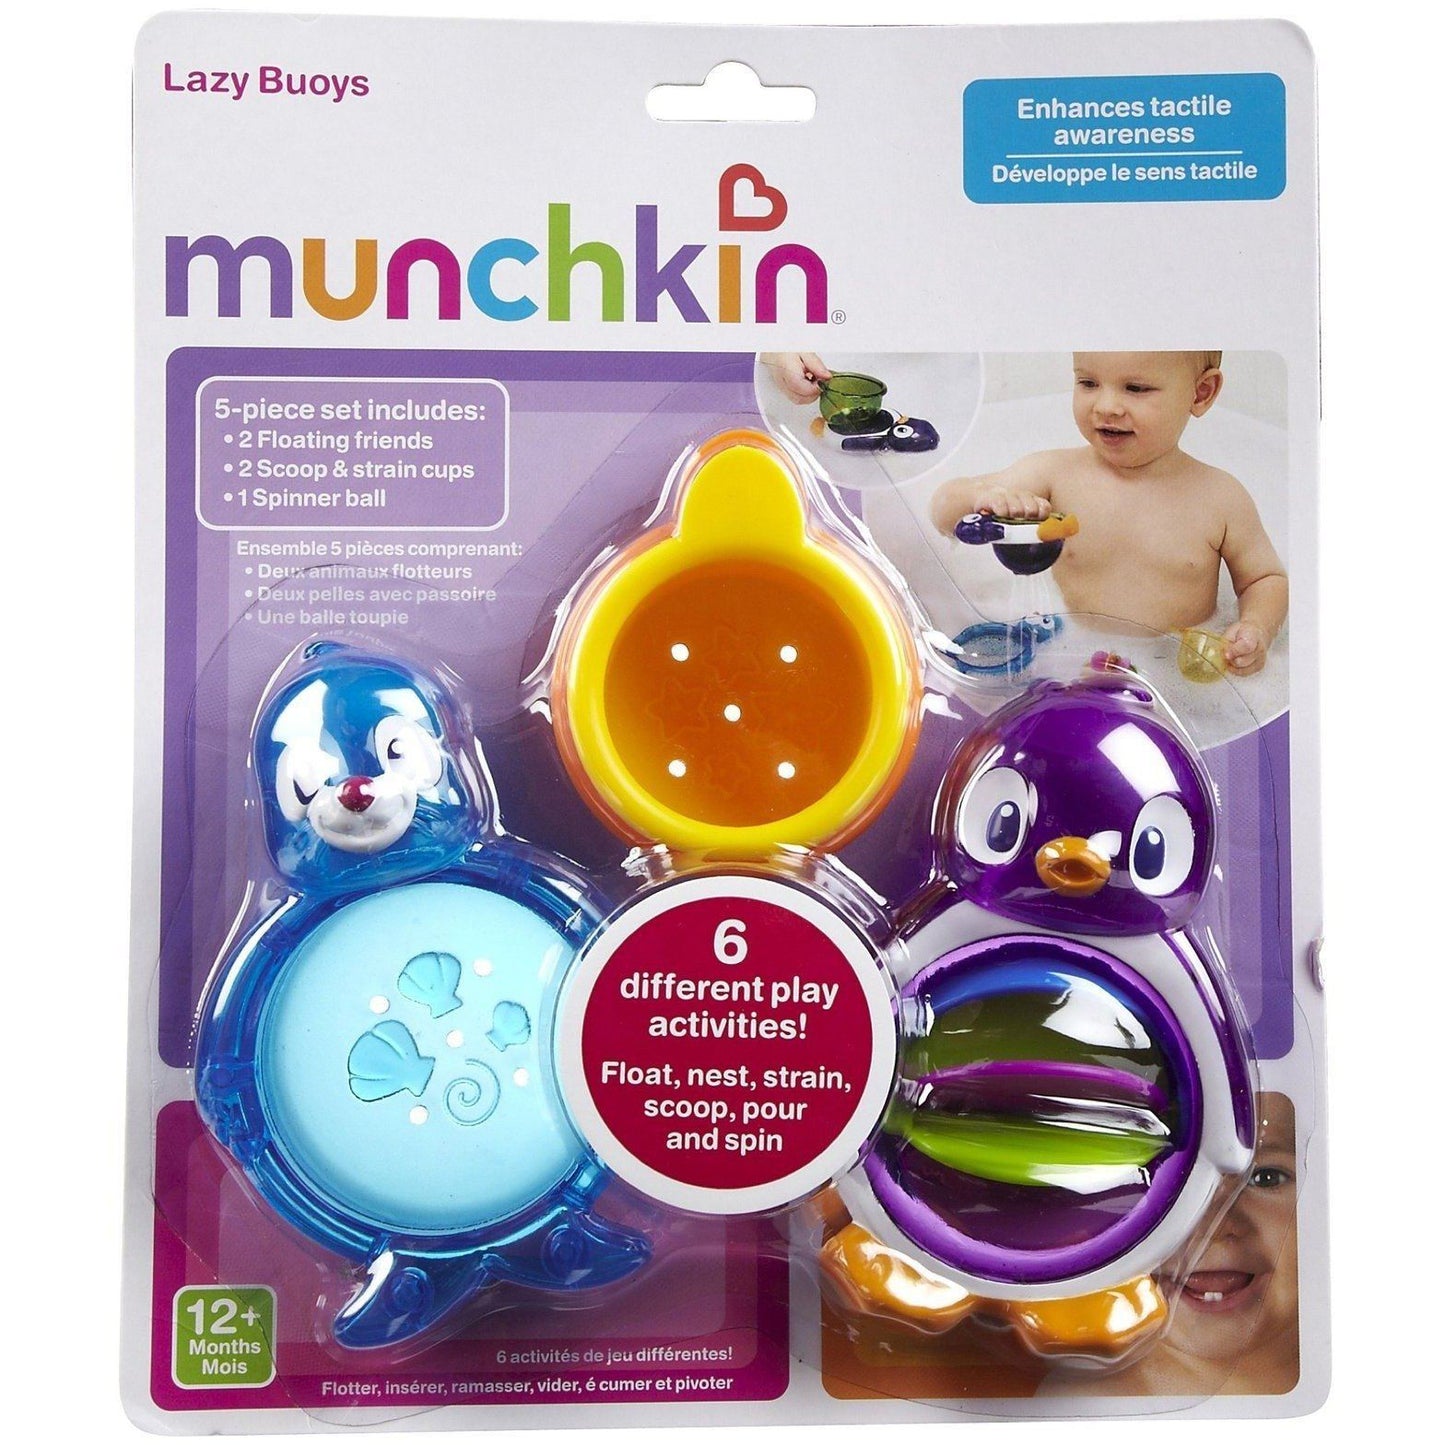 Munchkin Brinquedos de Banho Lazy Buoys Anne Claire Baby Store 